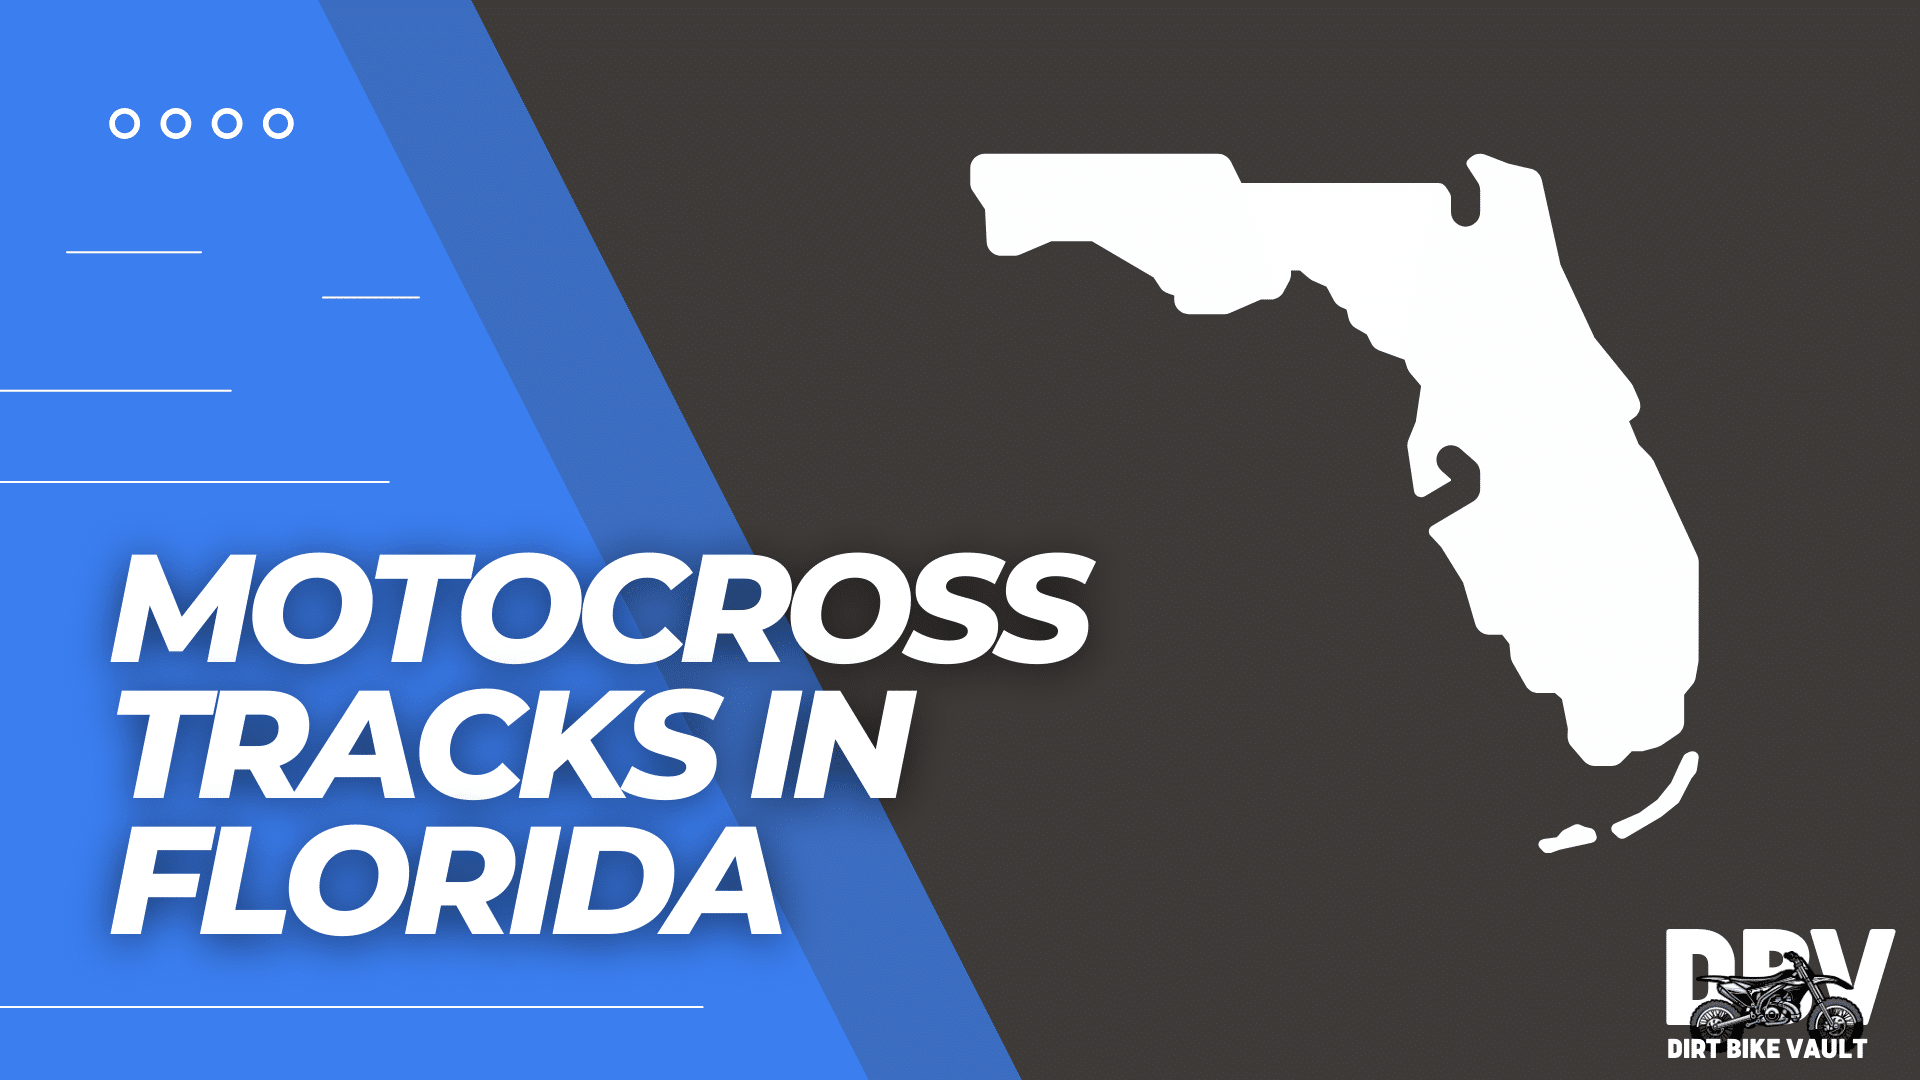 Motocross tracks in Florida